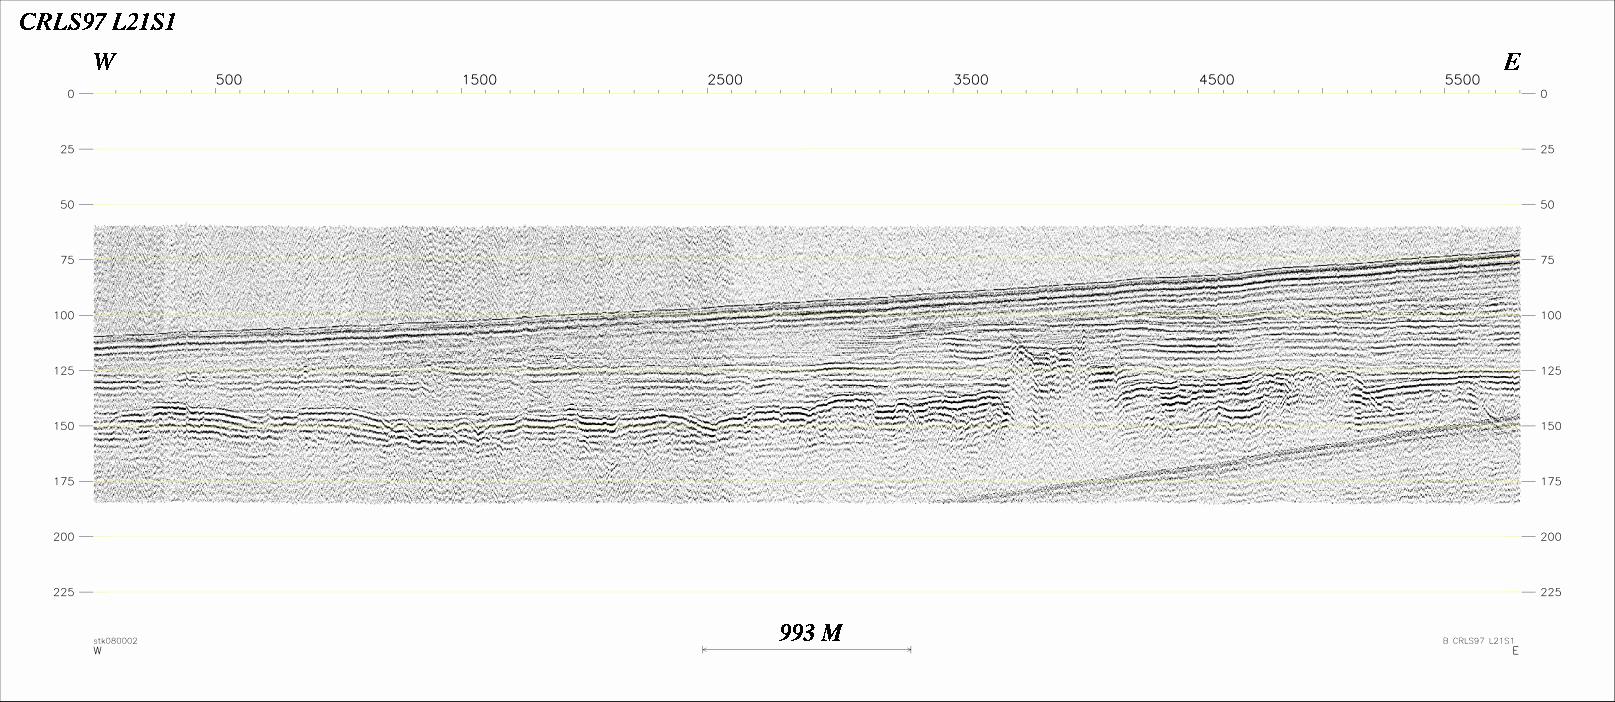 Seismic Reflection Profile Line No.: L21s1 (194532 bytes)